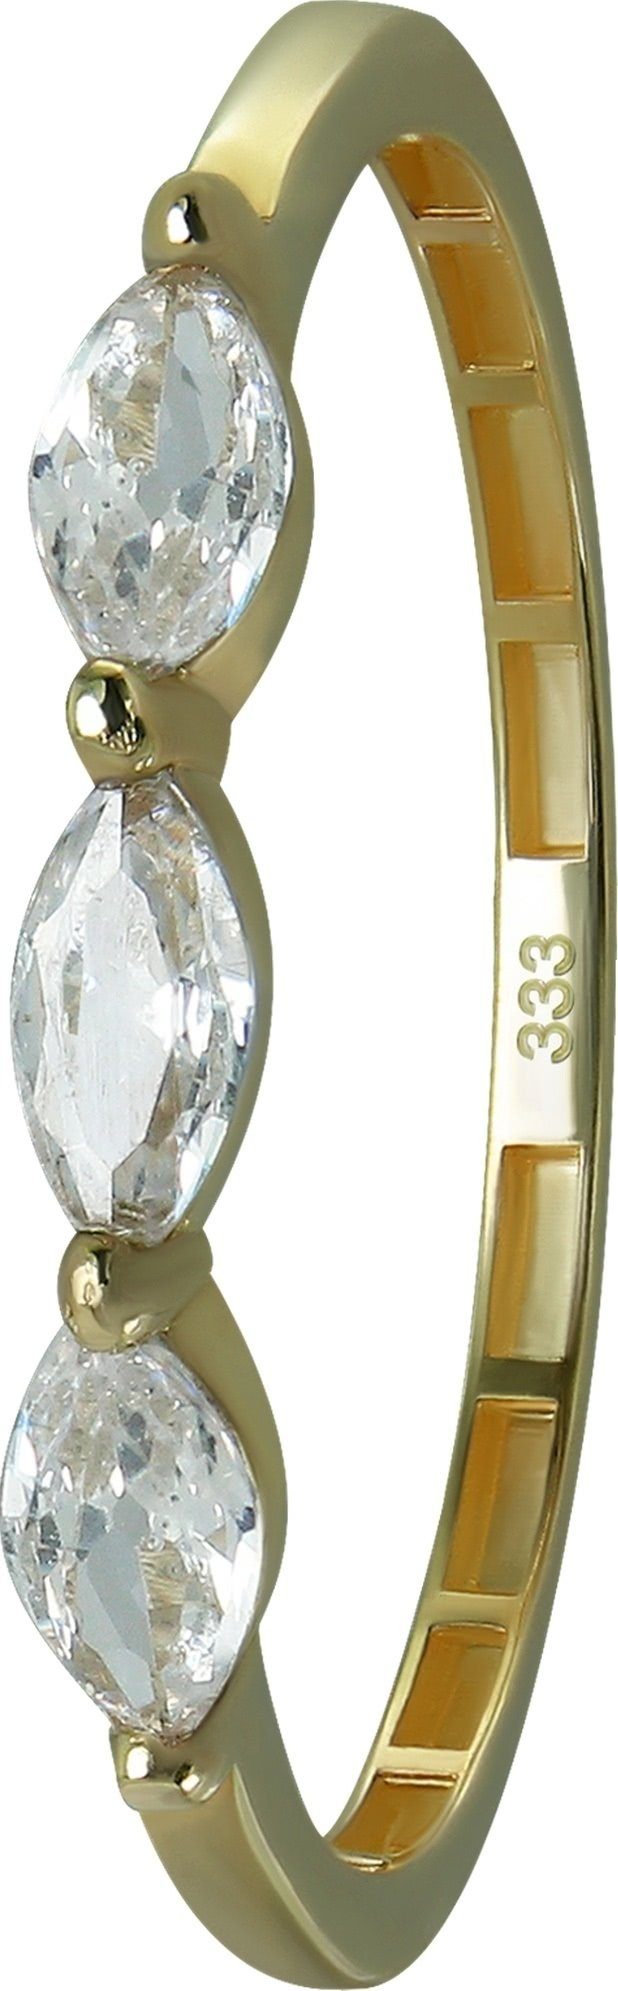 GoldDream Goldring GoldDream Gold Ring Shine Gr.60 Zirkonia (Fingerring), Damen Ring Shine 333 Gelbgold - 8 Karat, Farbe: gold, weiß